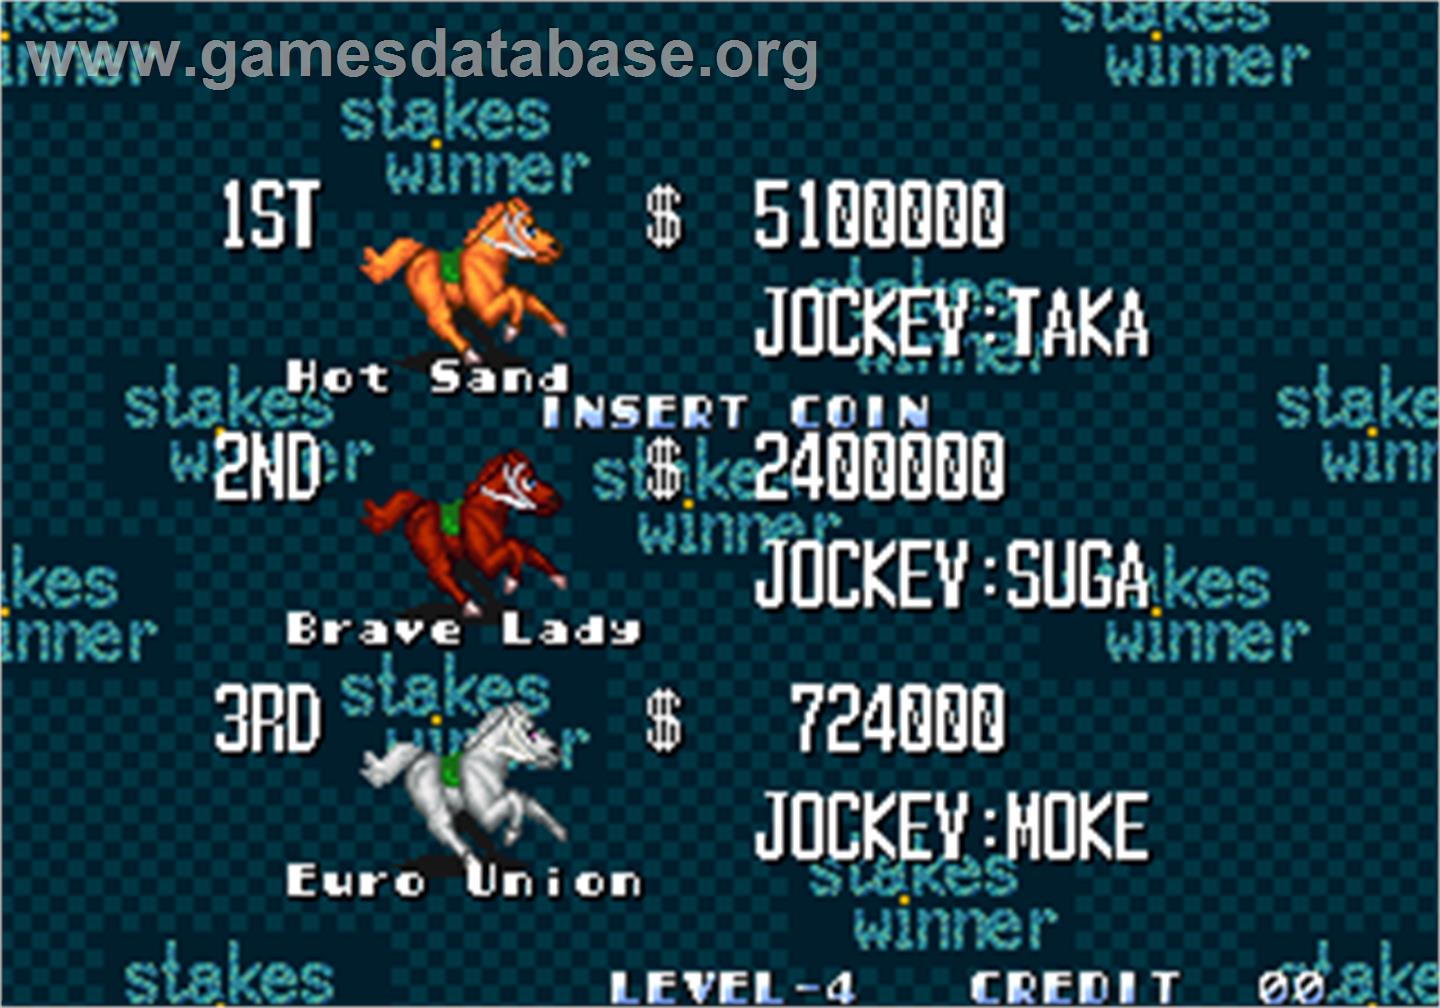 Stakes Winner / Stakes Winner - GI kinzen seihae no michi - Arcade - Artwork - High Score Screen